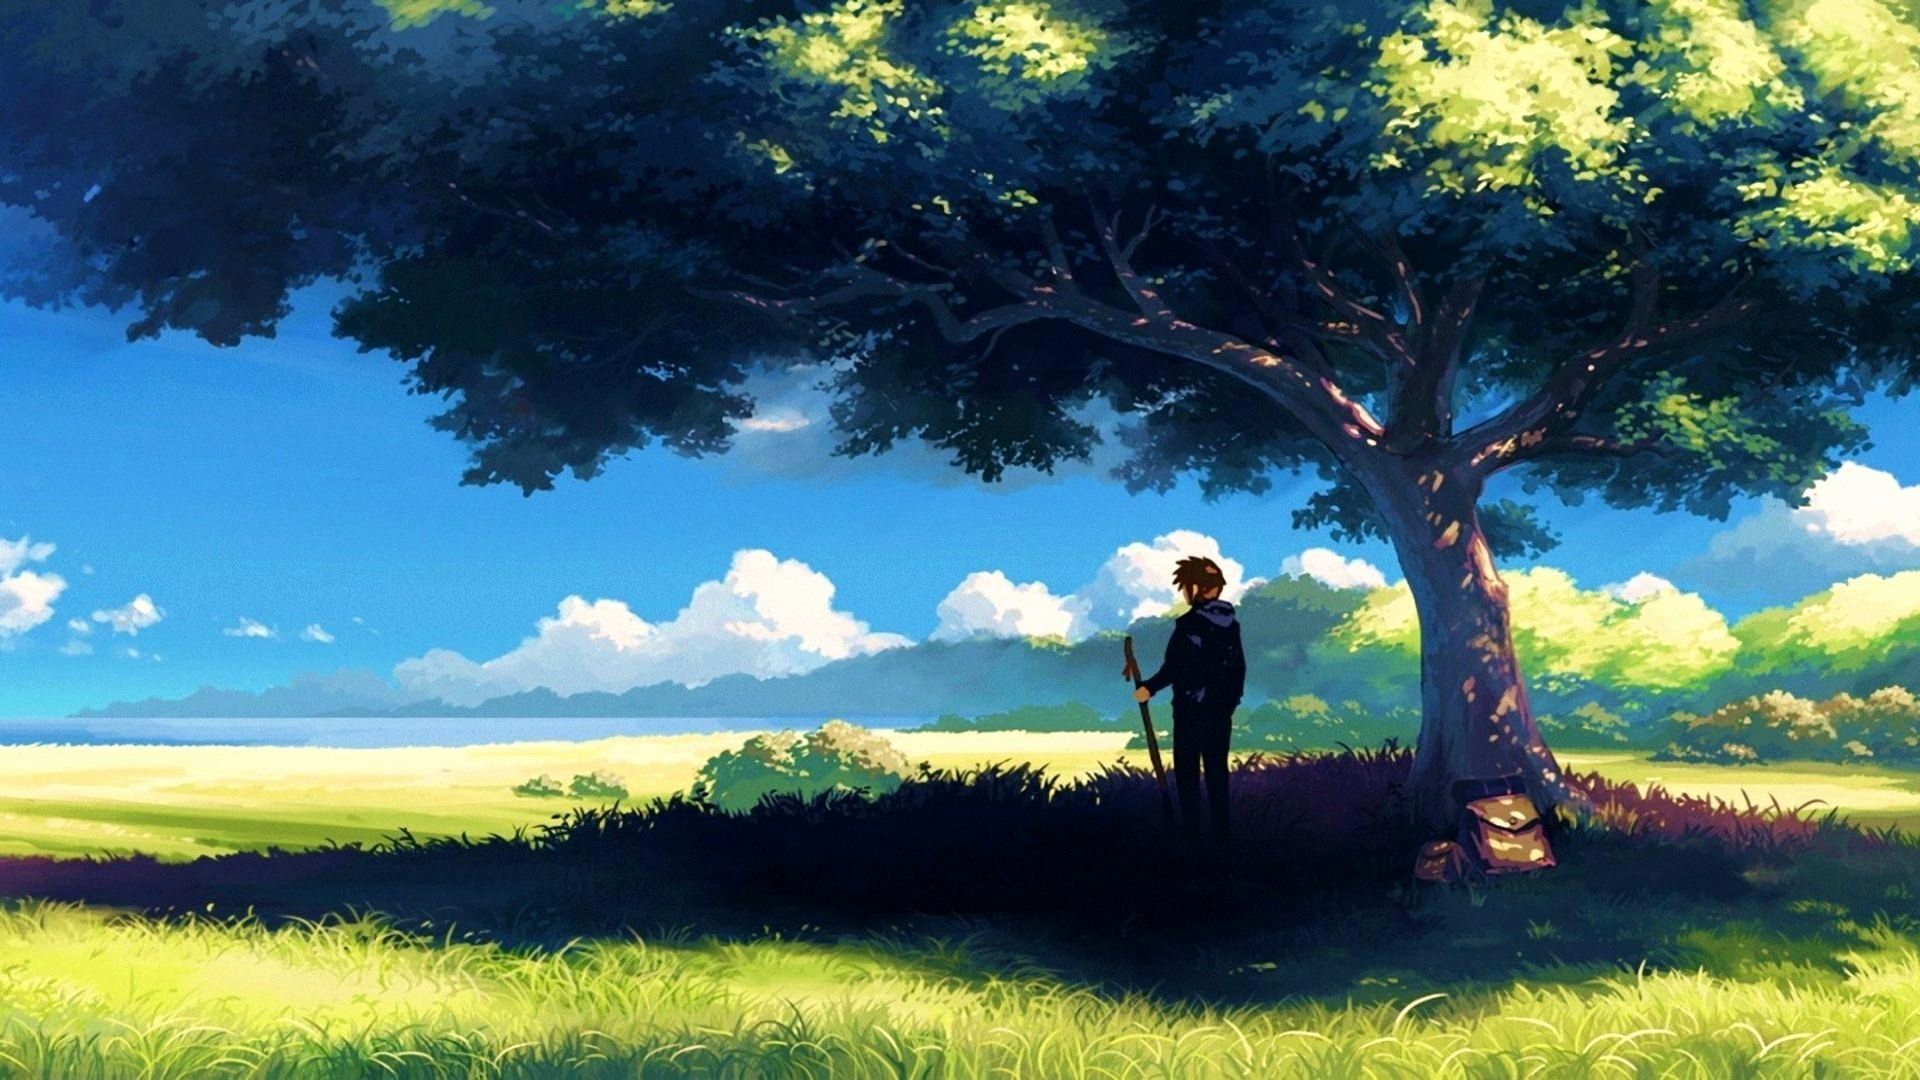 Anime Landscape Inspirational Anime Landscape Wallpaper Wallpaper